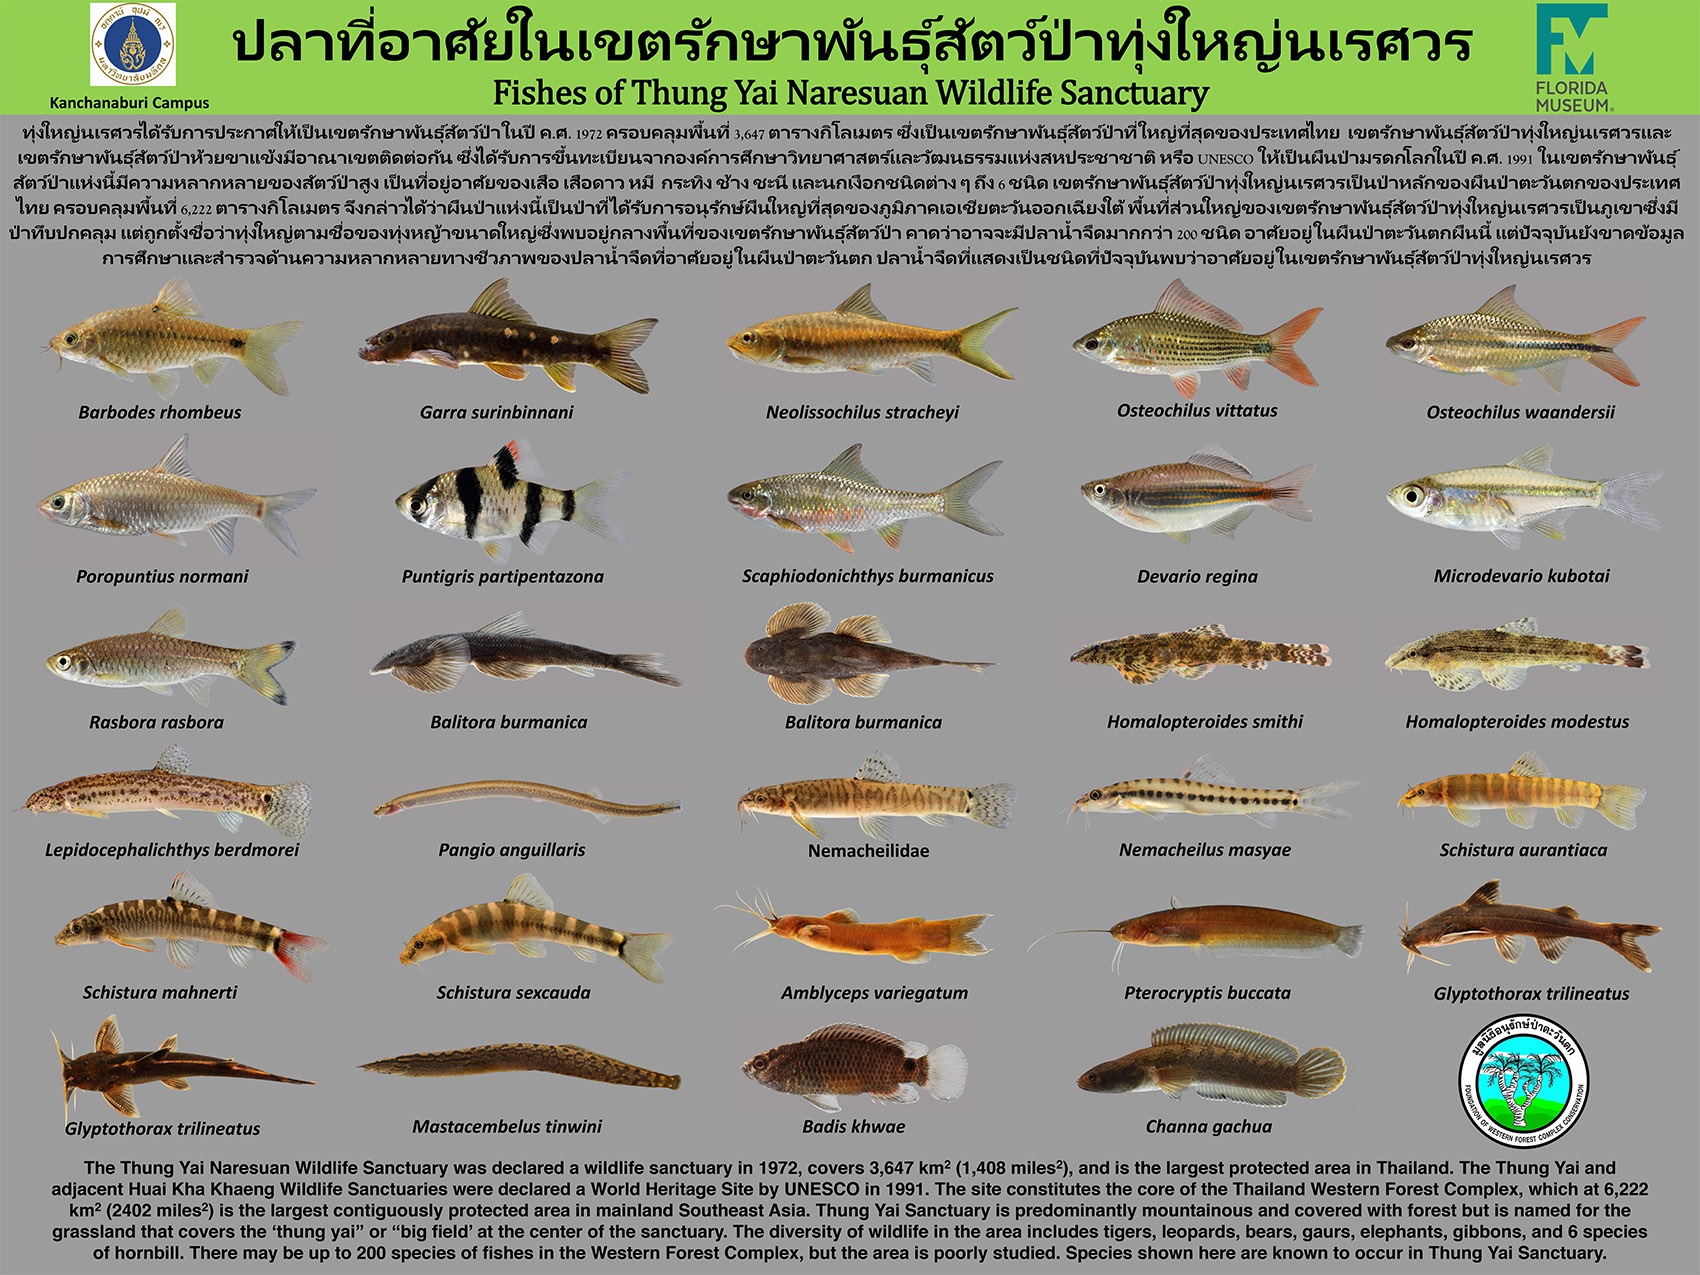 Netherworldly' freshwater fish named for Thai conservation